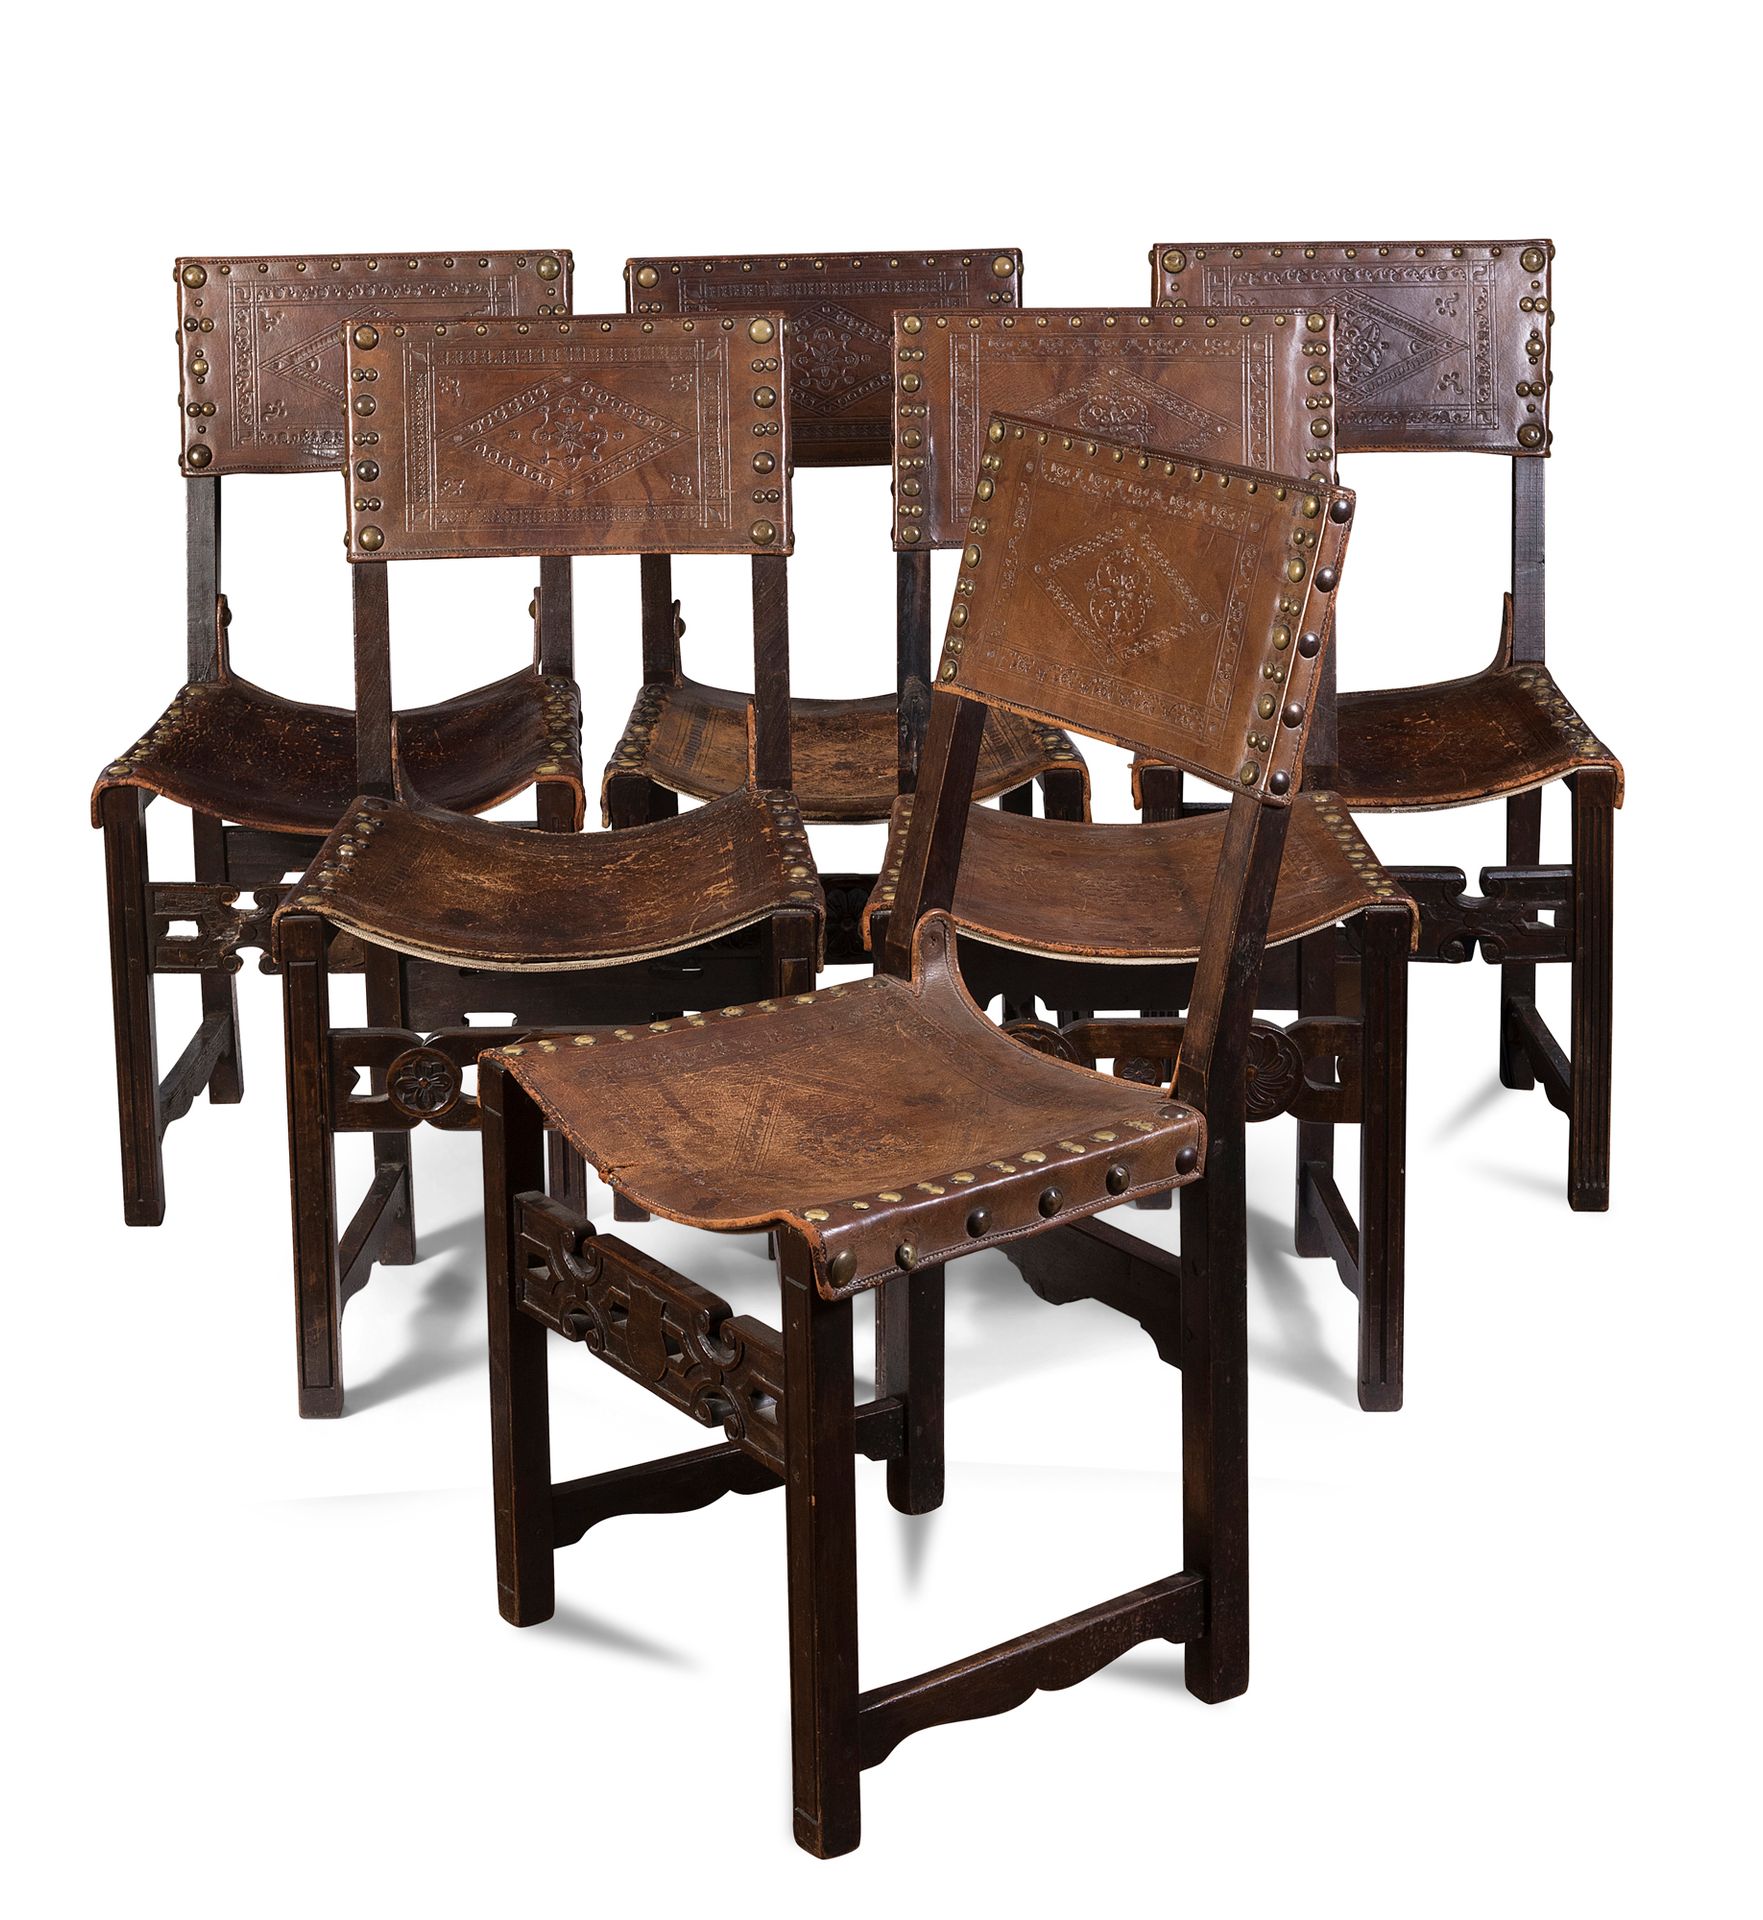 Null 一套六把带有植物装饰的模制和雕刻的木椅，椅腿由支架连接。压花和铆钉的皮革内饰，带有几何装饰。
由古老的元素和略有不同的模型组成
17世纪的西班牙风格。&hellip;